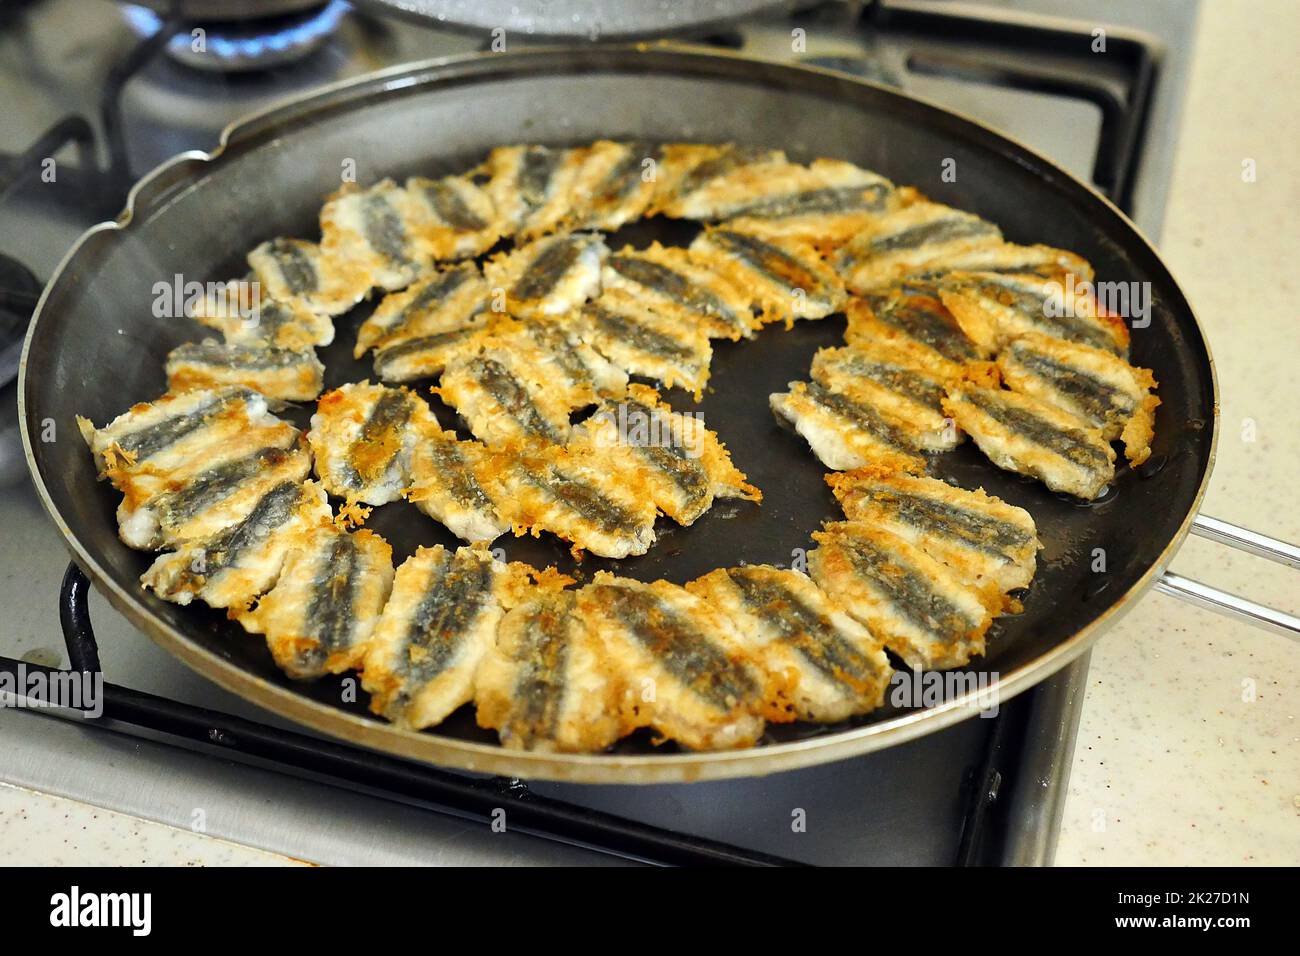 fried fish in frying pan 17221579 PNG